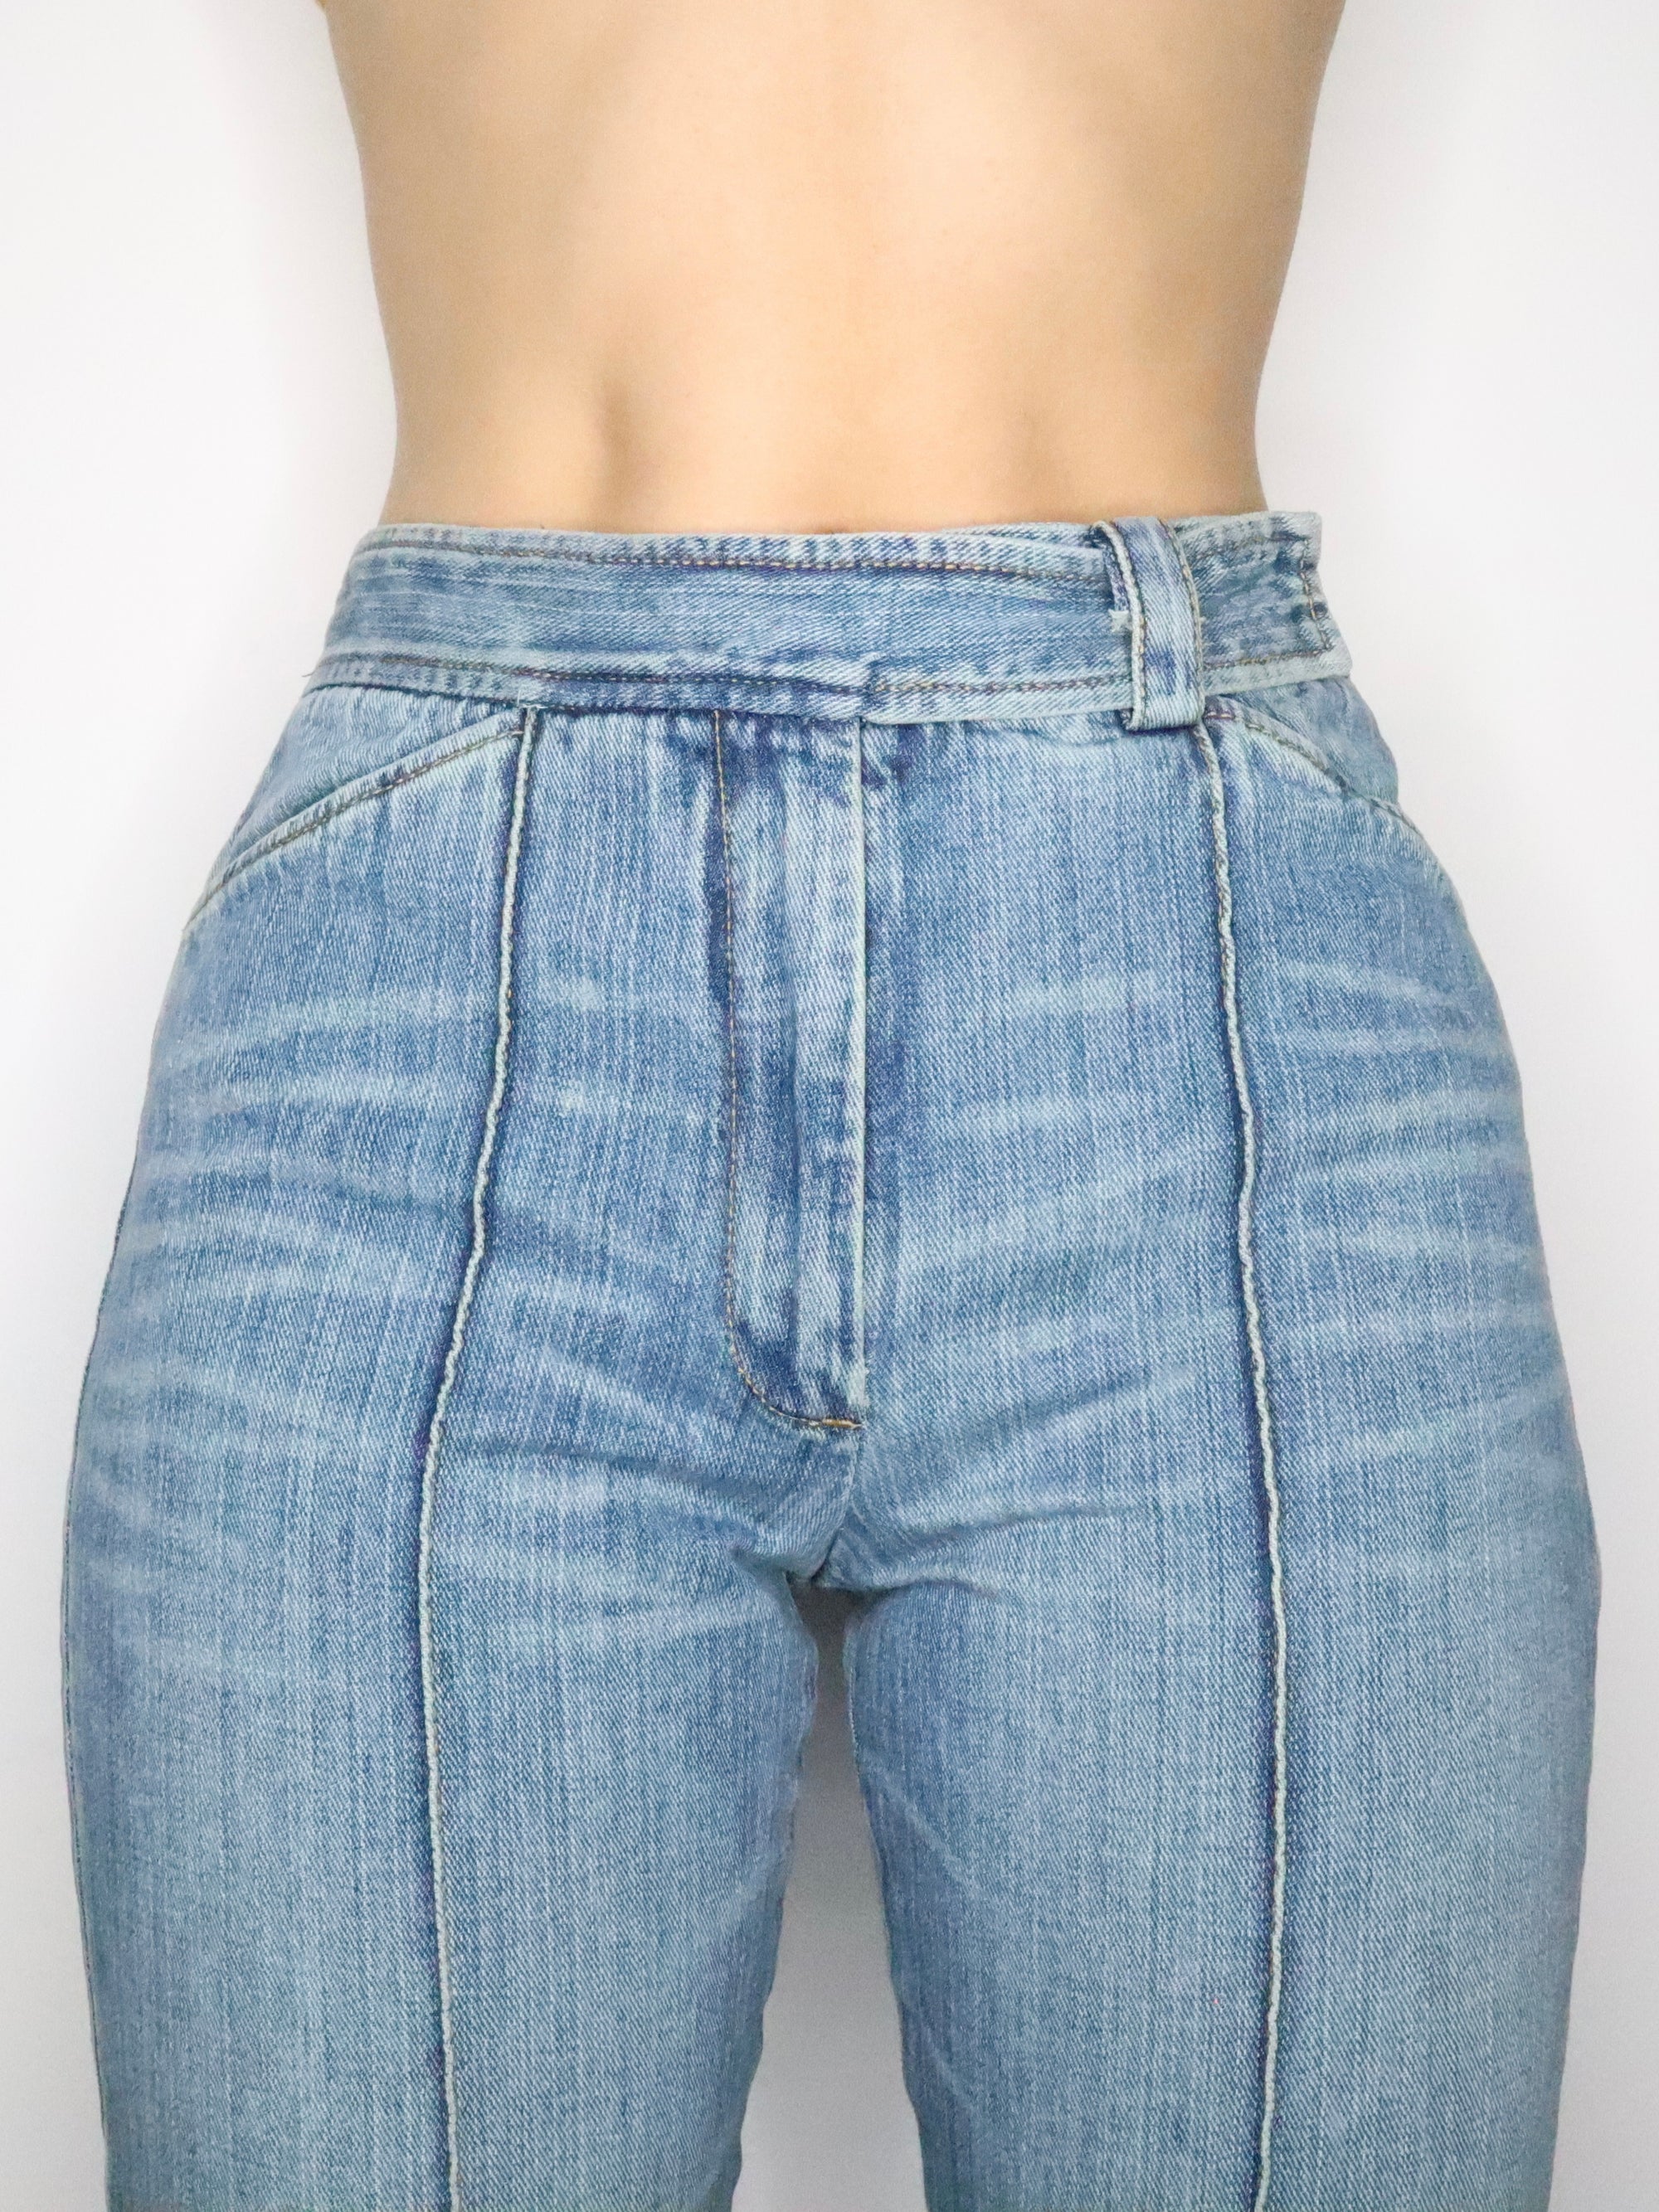 DKNY High Waisted Flare Jeans (Large)